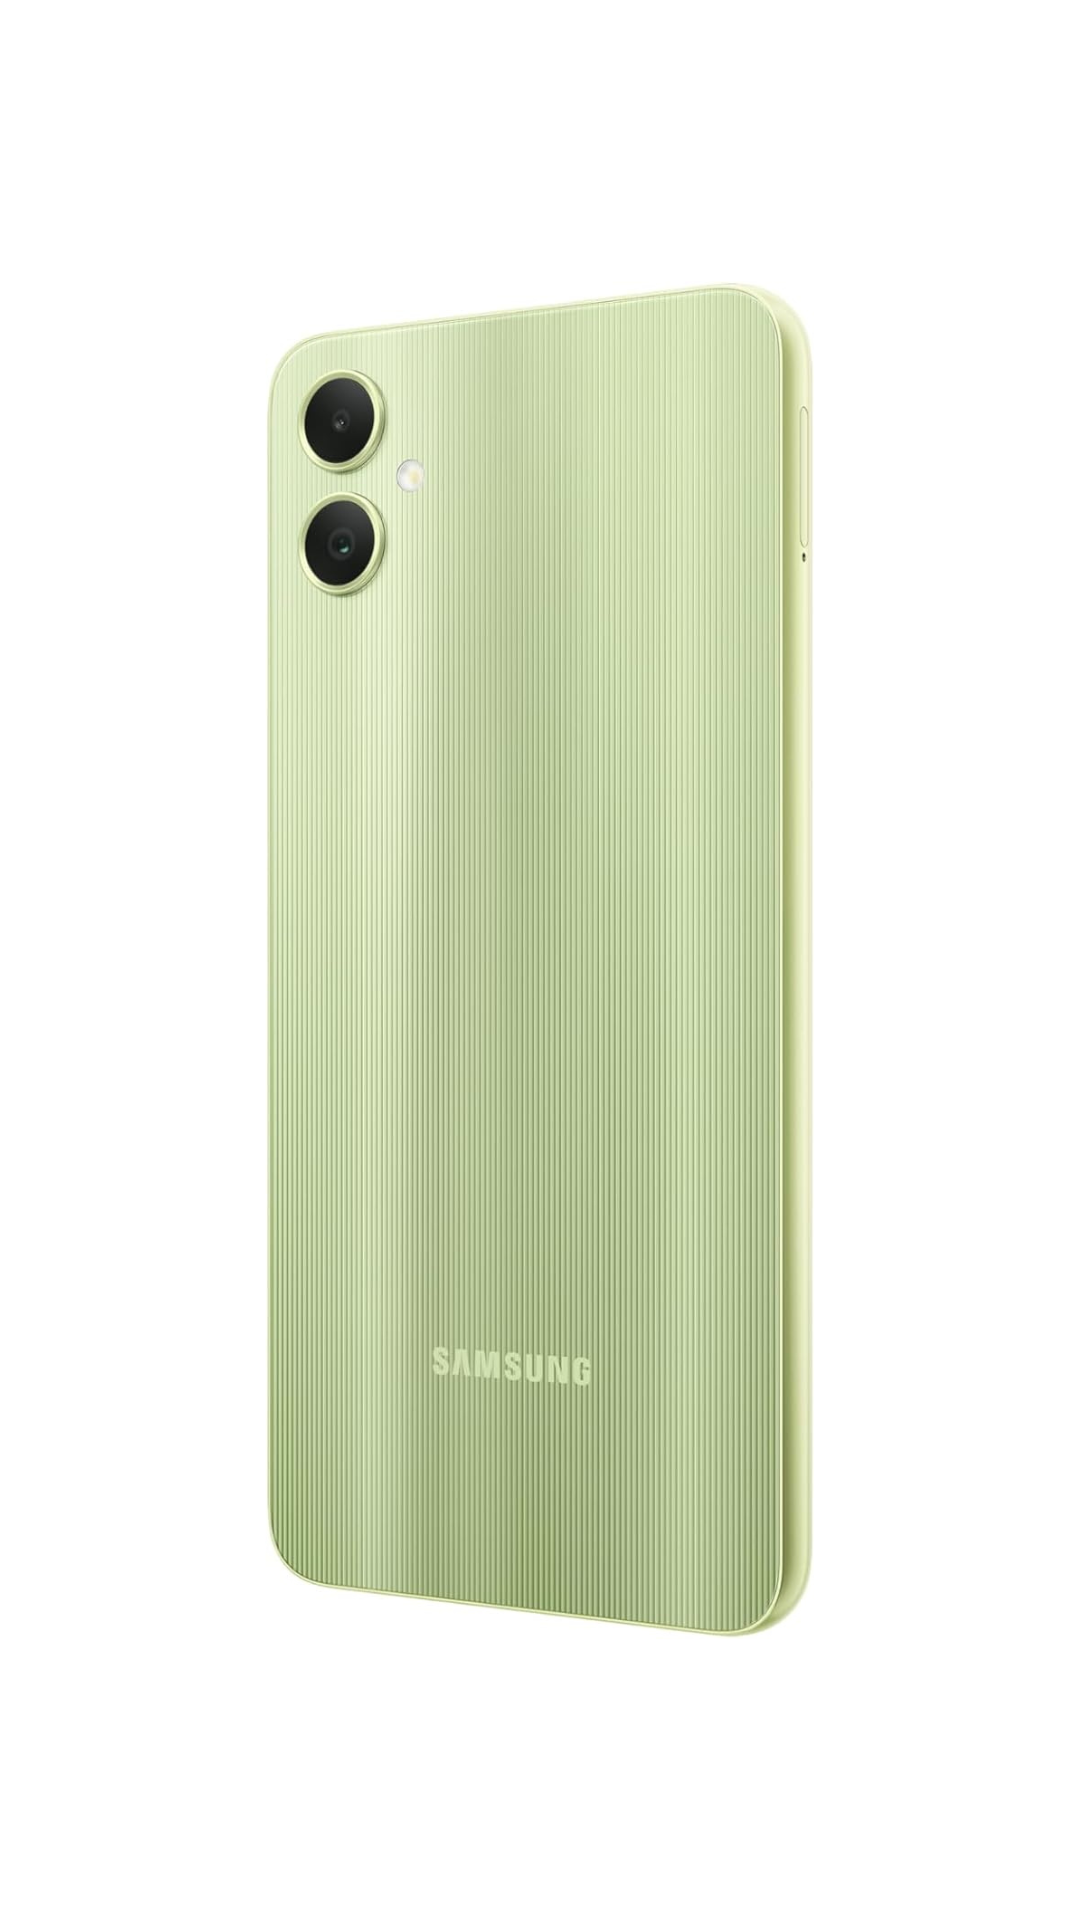 Samsung Galaxy A05, Android Smartphone, Dual SIM Mobile Phone, LTE, 4GB RAM, 128GB Storage